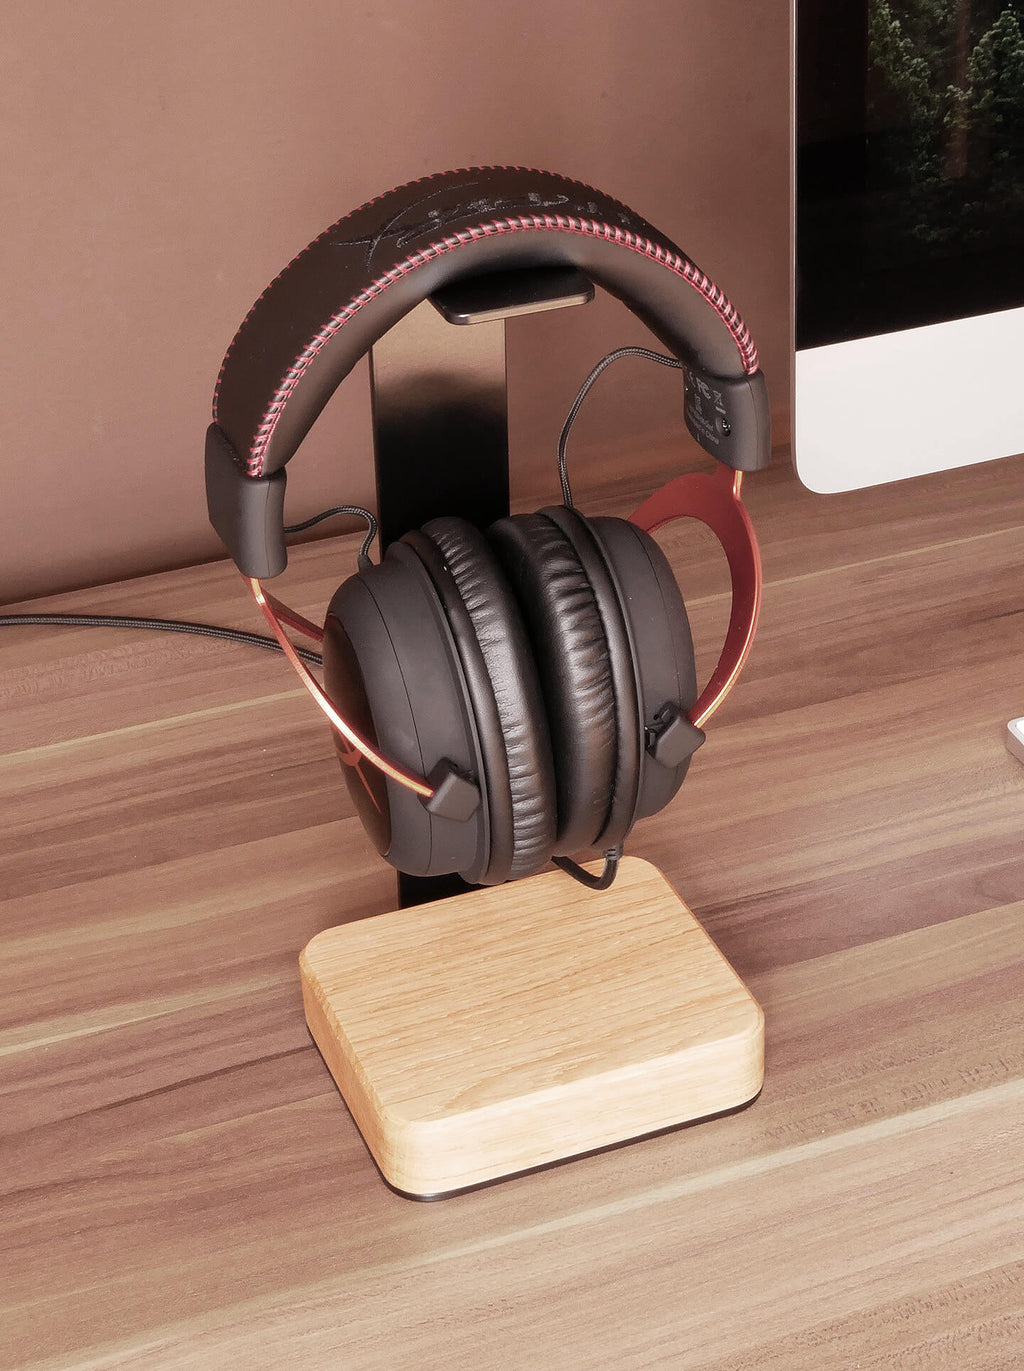 Custom Wood Headphone Stand, Corporate Gifts